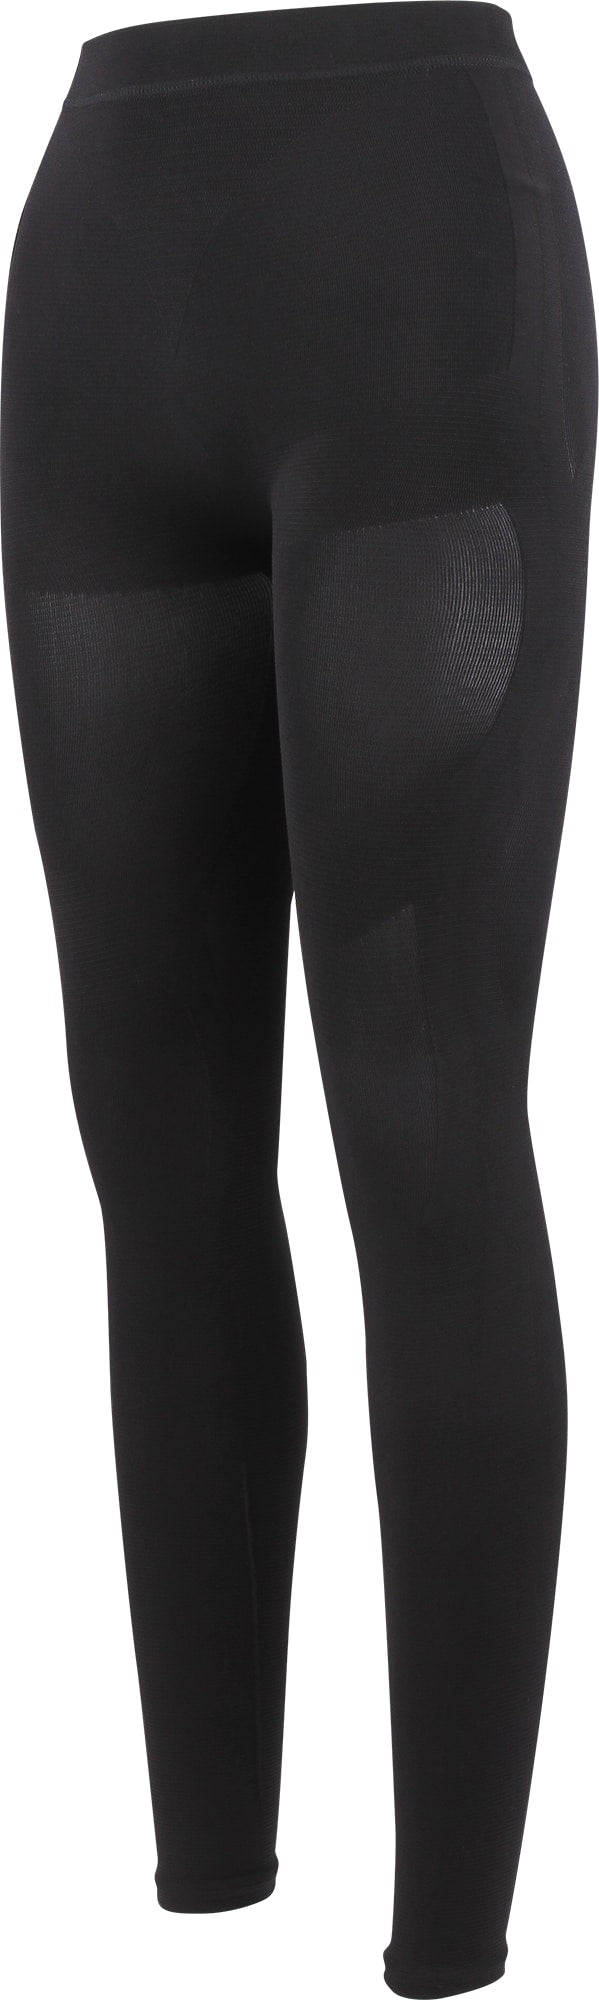 cozy leggings for winter [Unisex] ⚤ - Zerofit USA